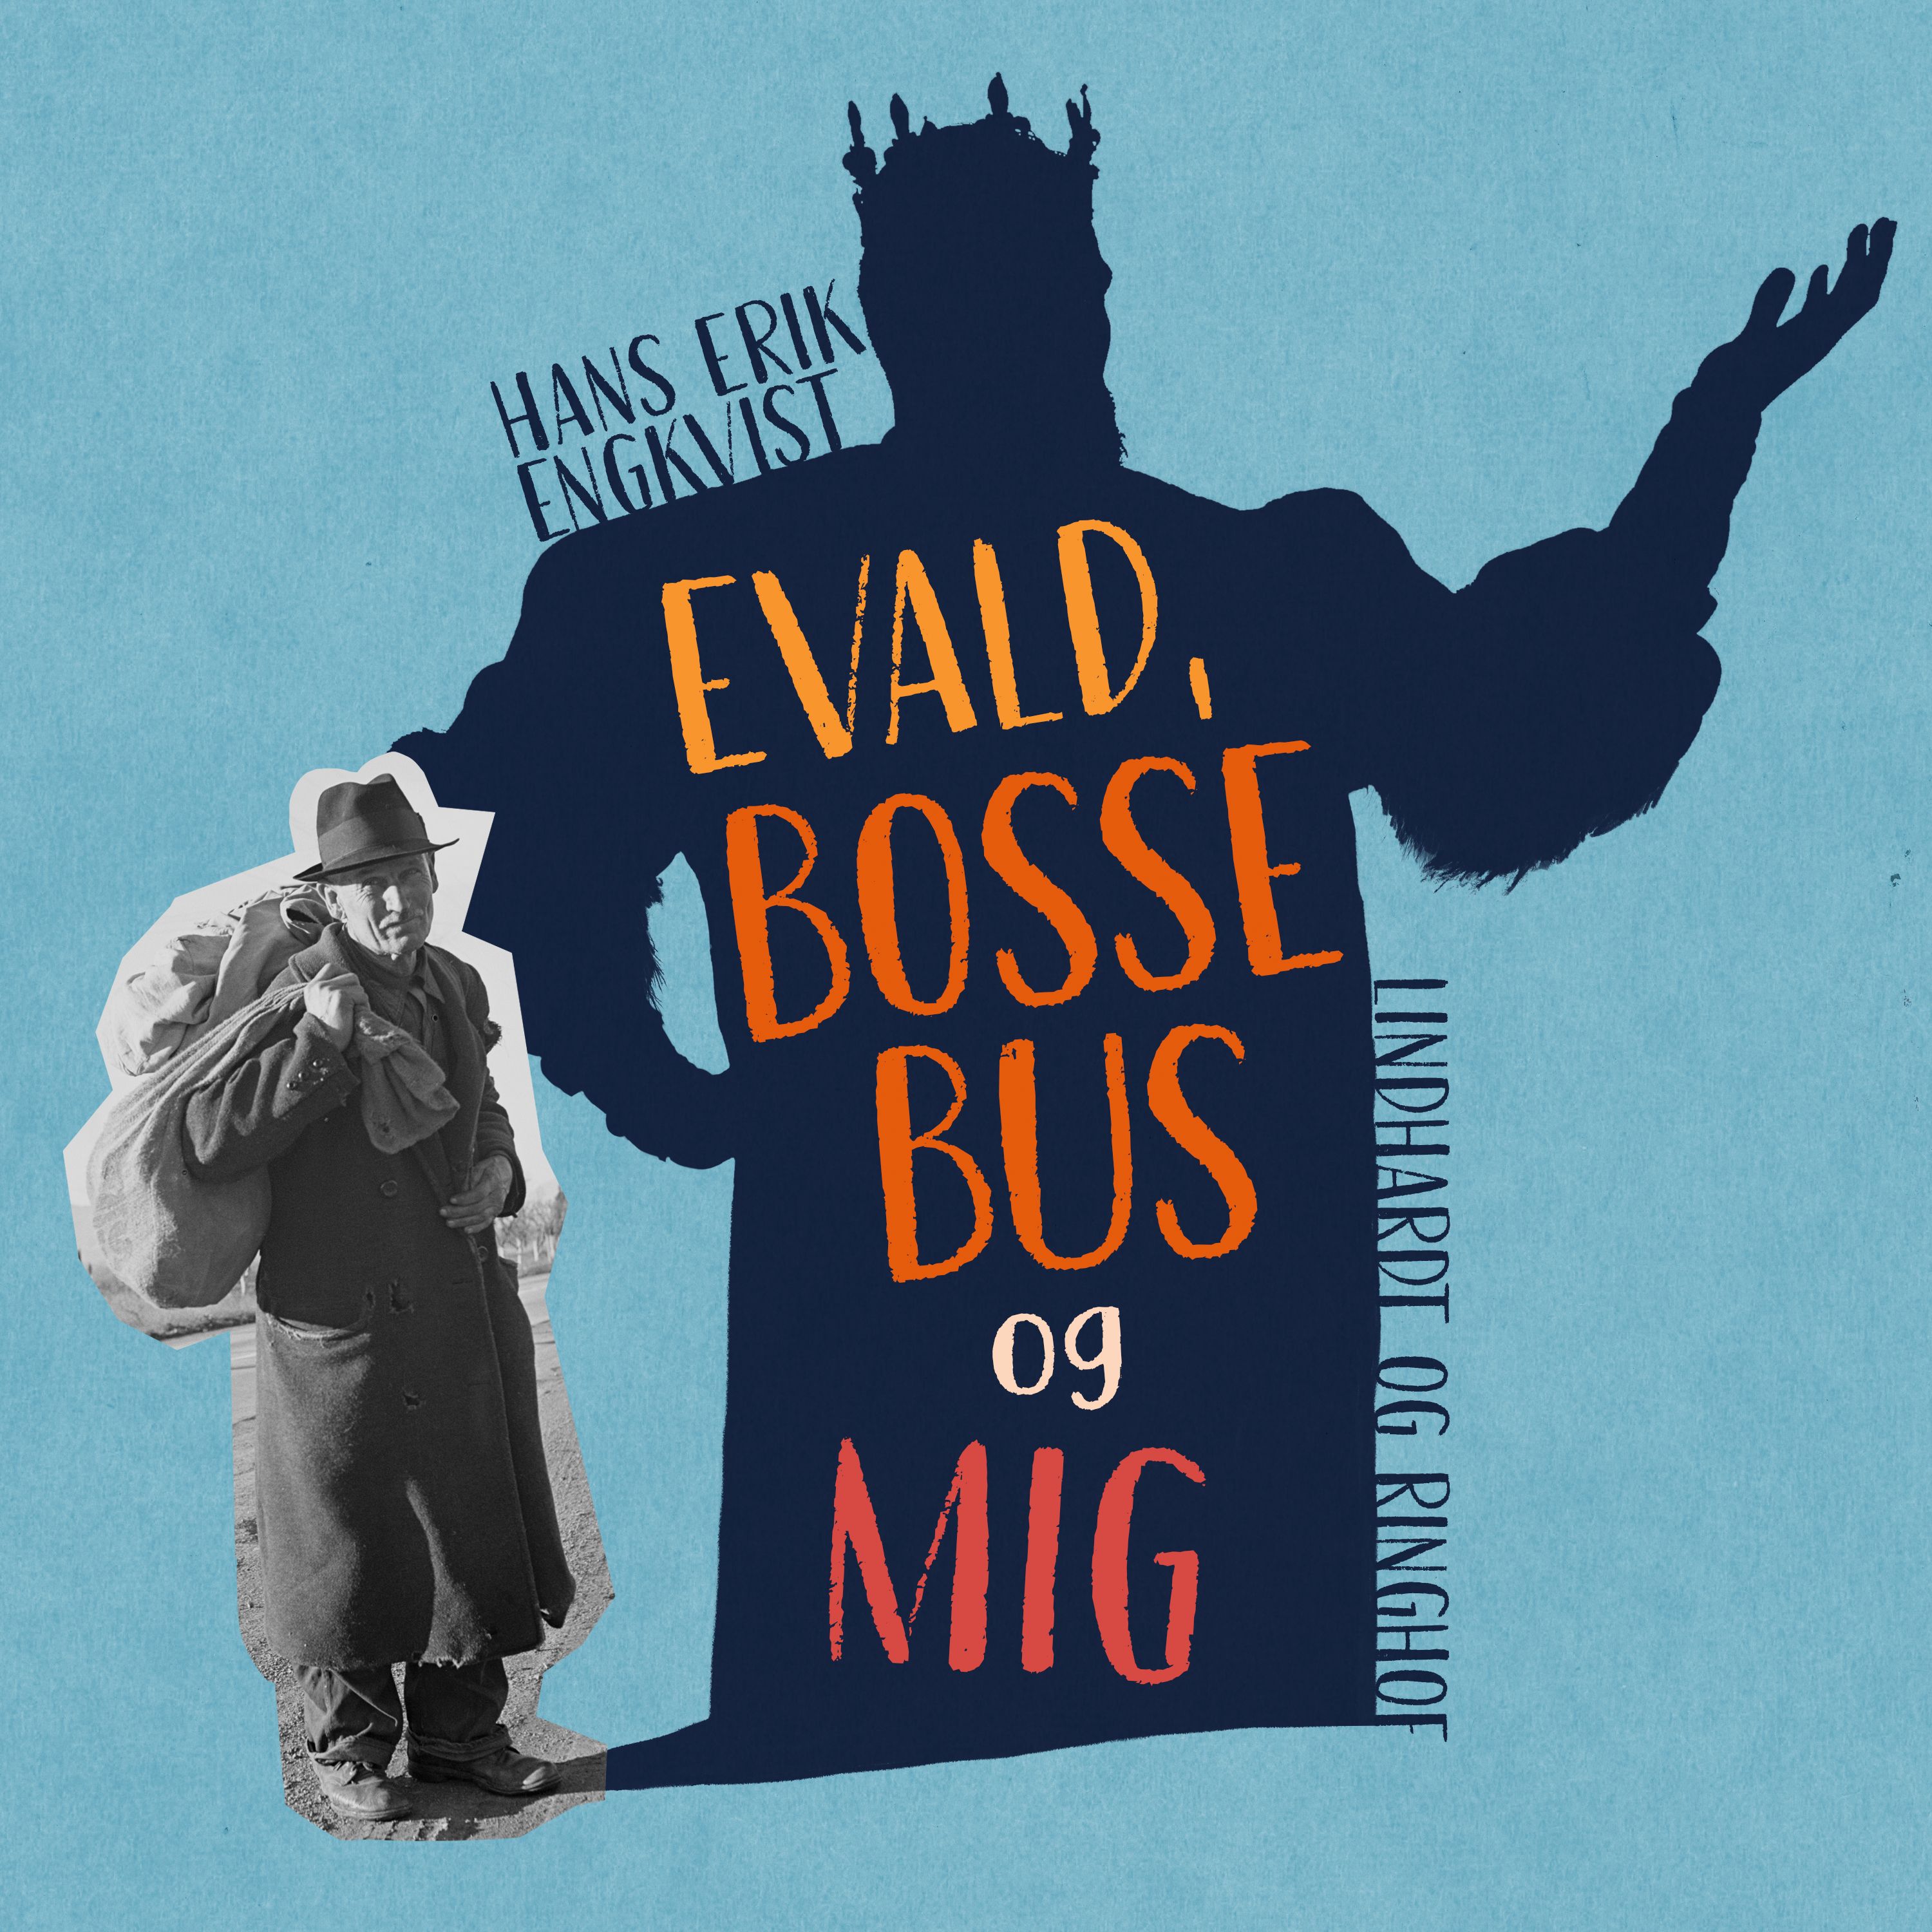 Evald, Bosse Bus og mig, ljudbok av Hans Erik Engqvist